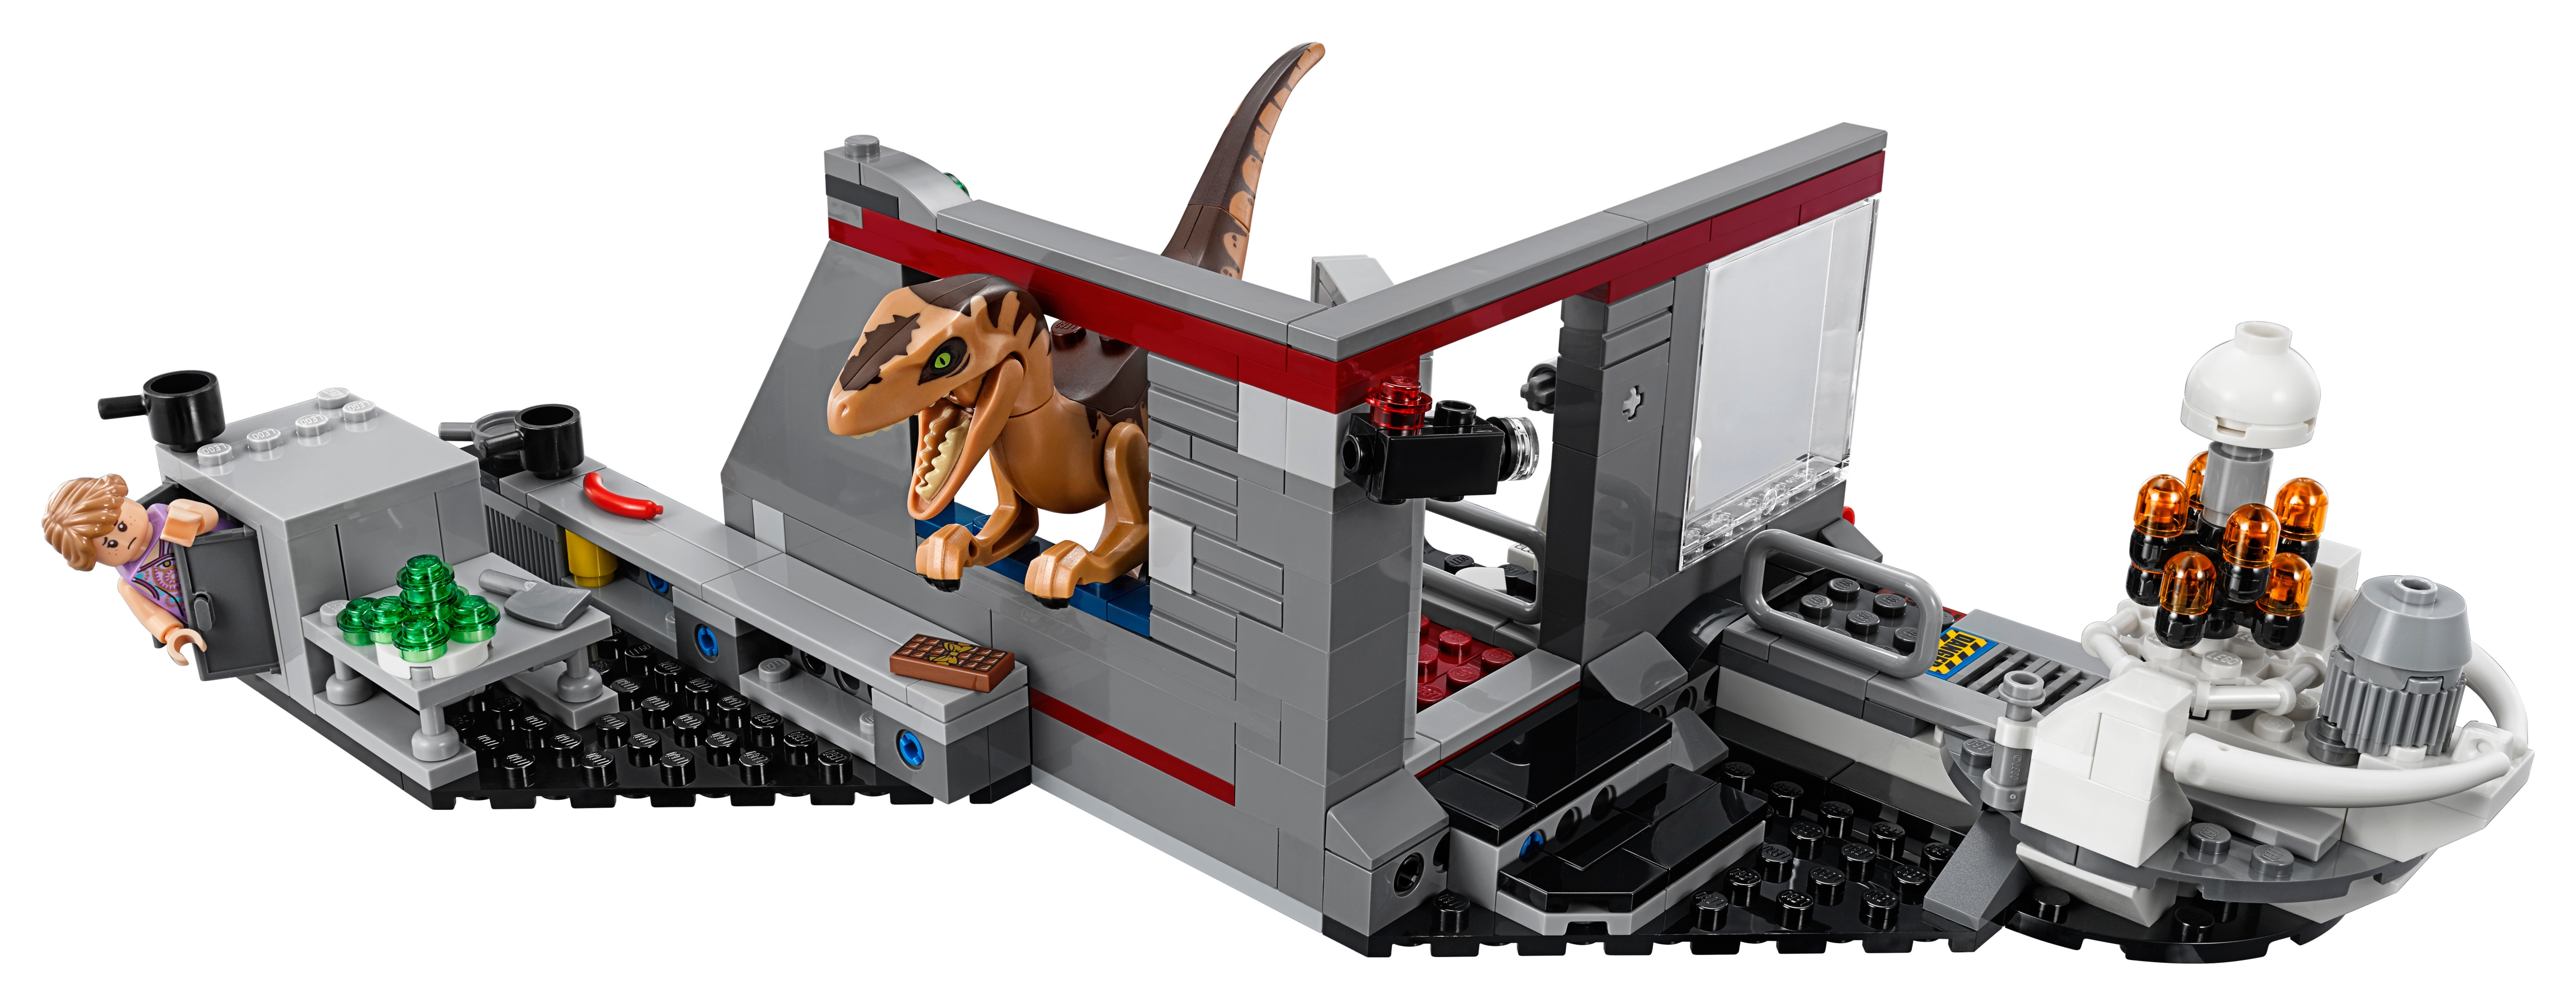 Jurassic Park Velociraptor Chase 75932 Jurassic World™ | Buy online at the Official LEGO® Shop US